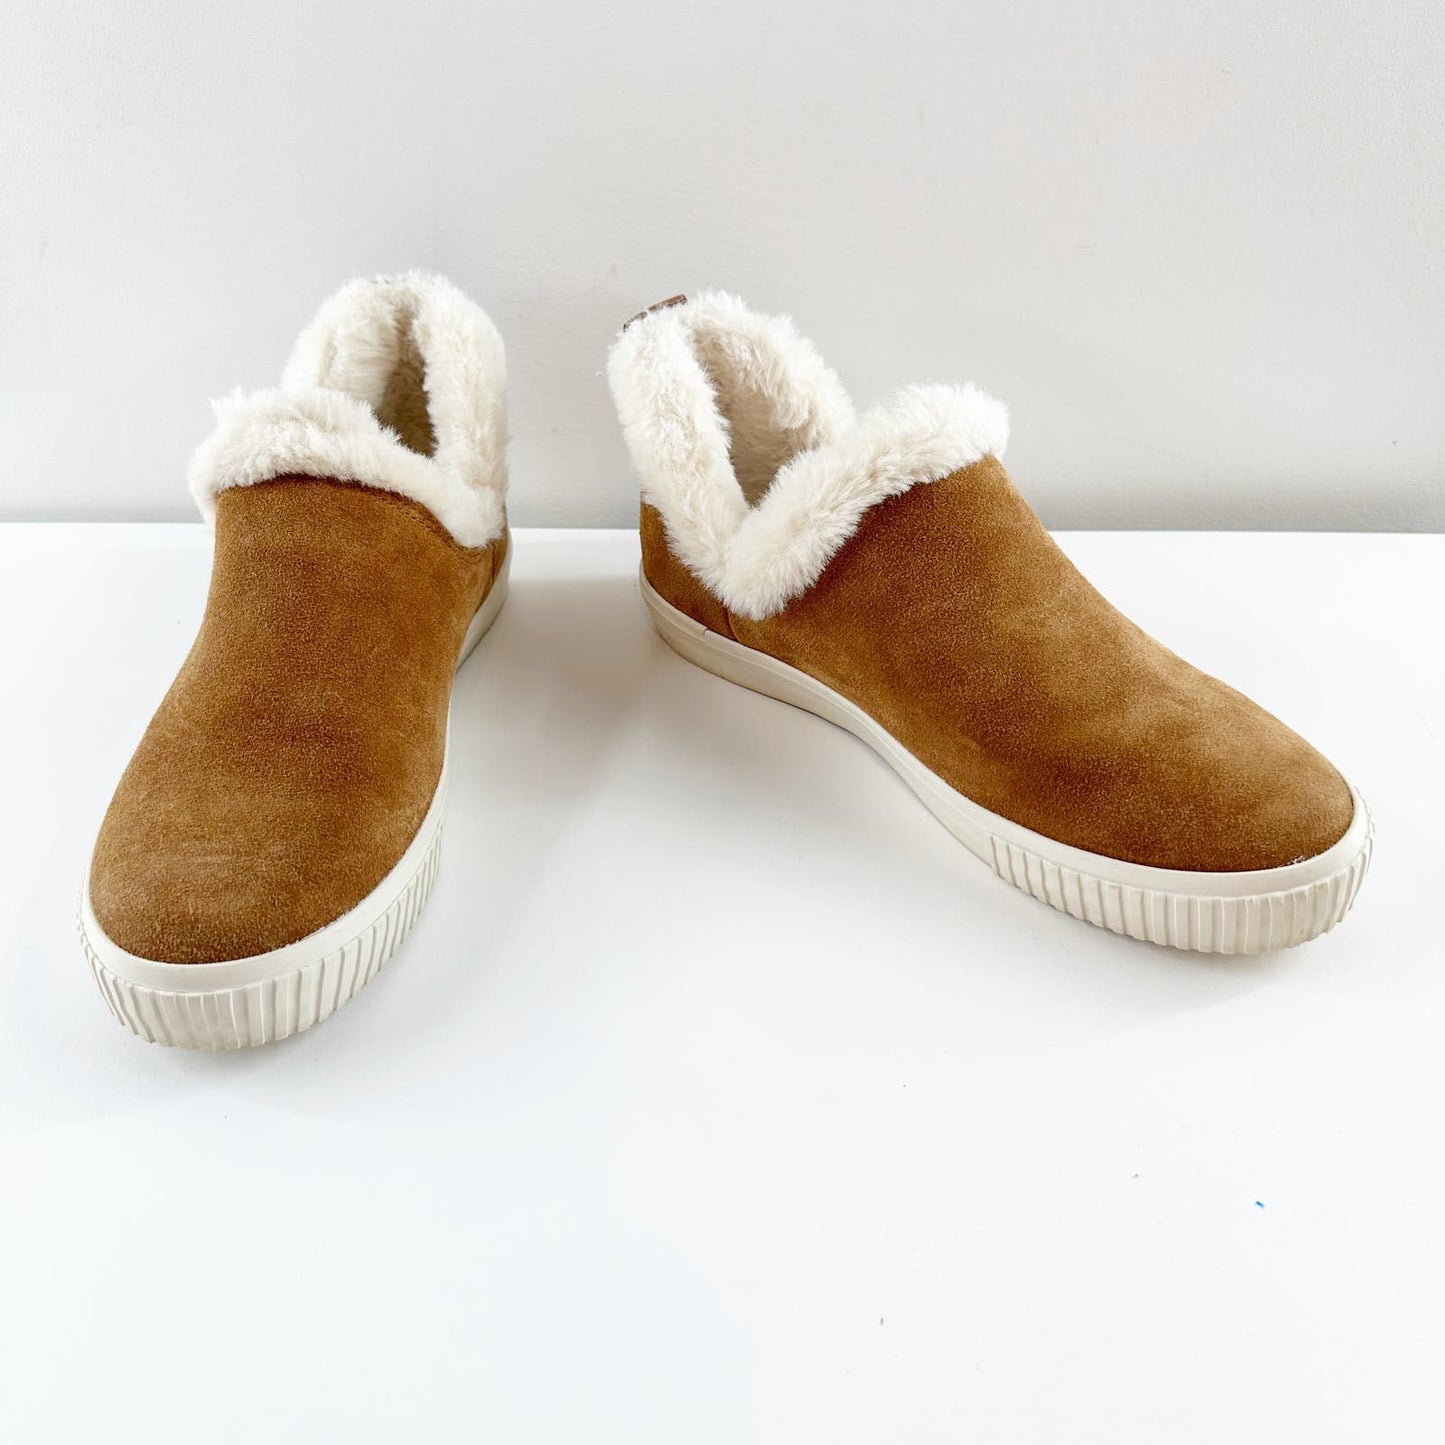 Timberland Skyla Bay Slip On Fur Lined Sneaker Shoes Suede Brown 8.5